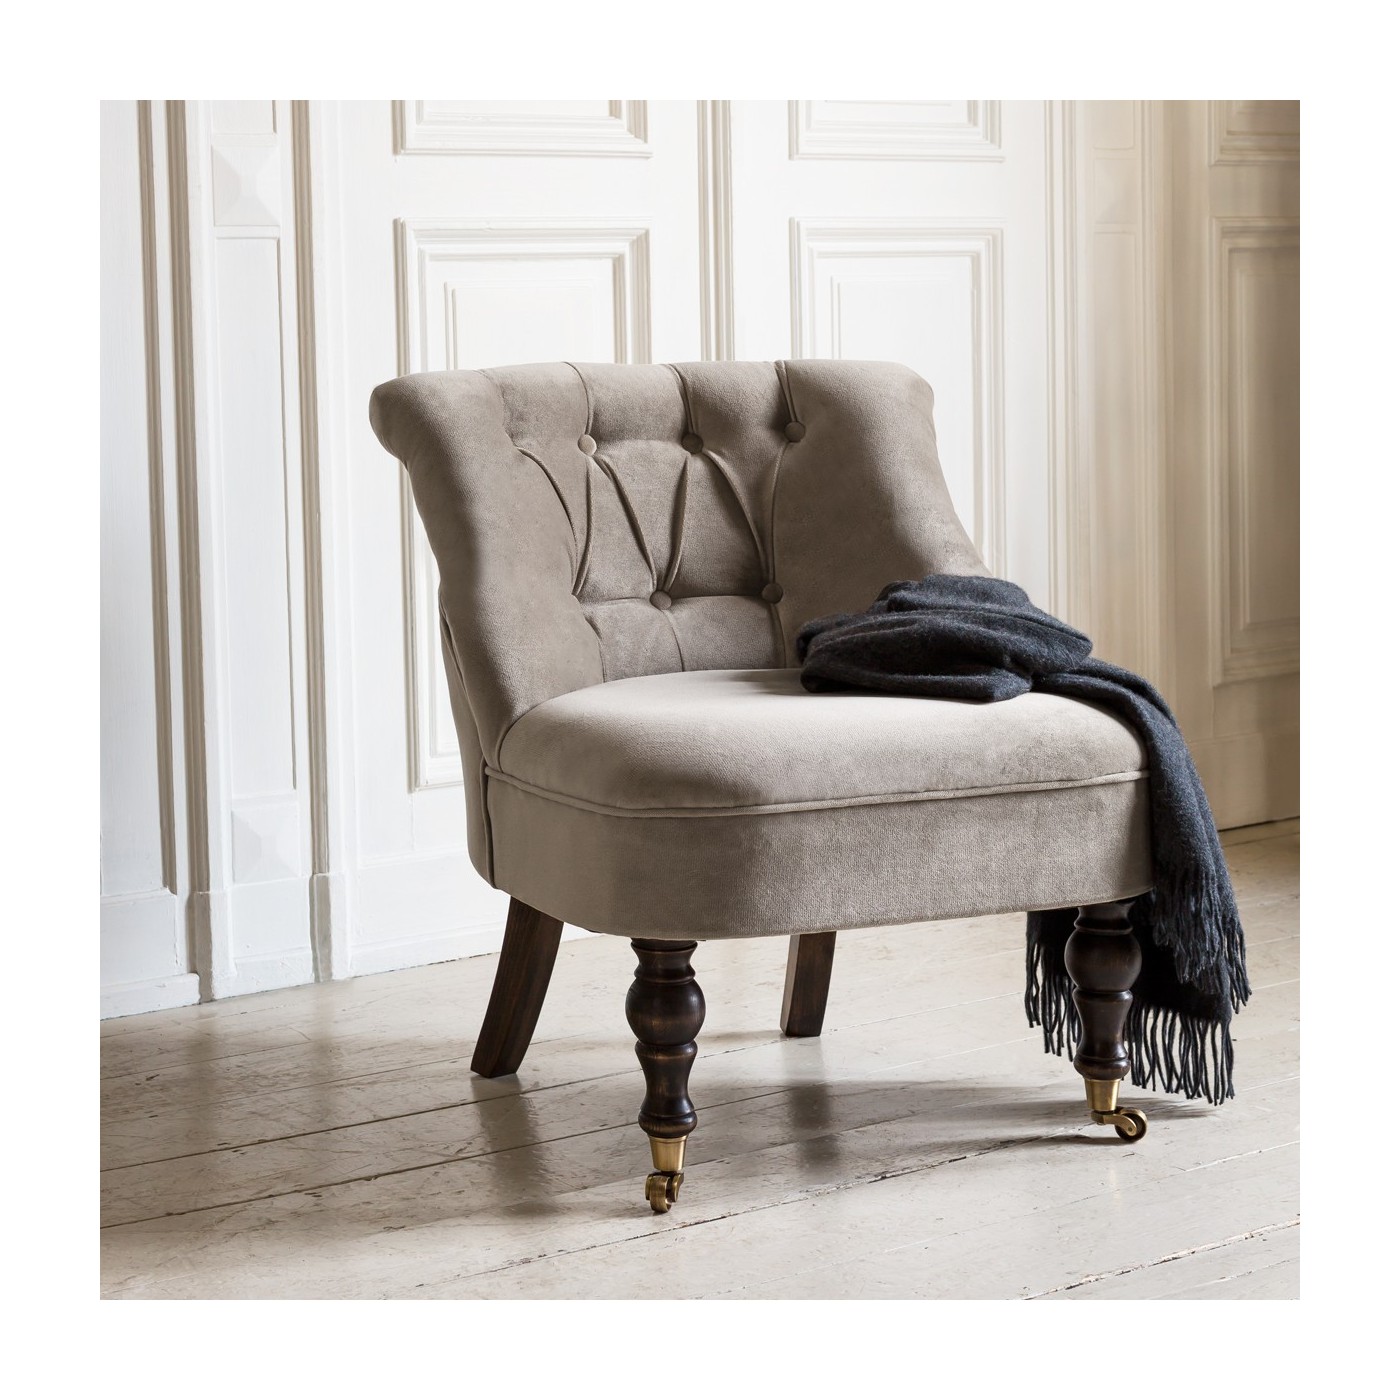 Occasional Bedroom Chairs | Donatz.info